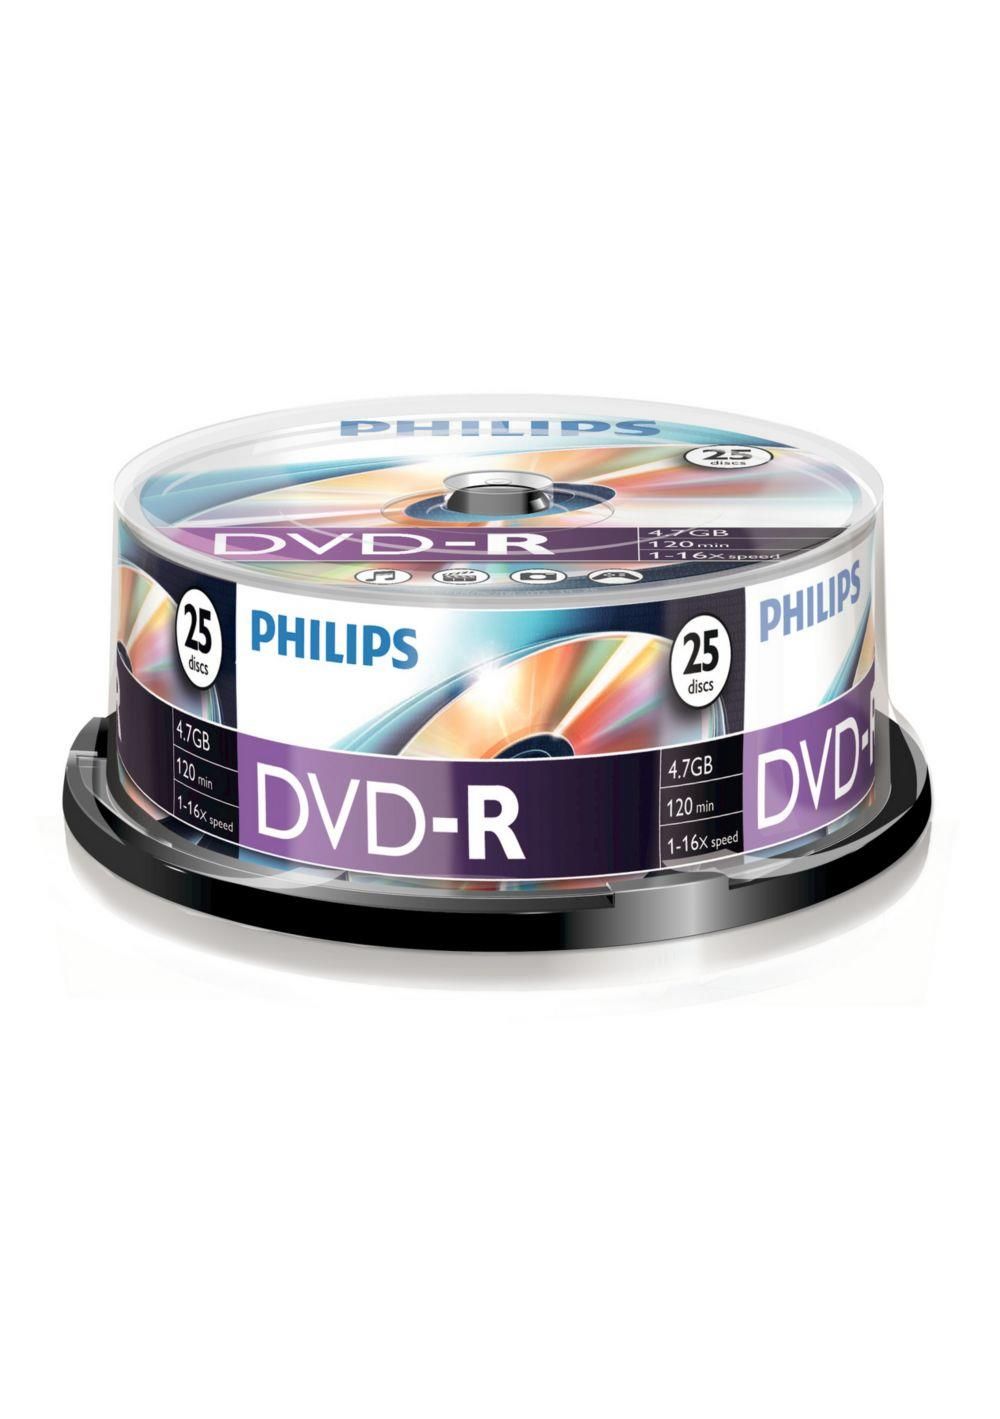 Philips Dvd-R 16X 120M